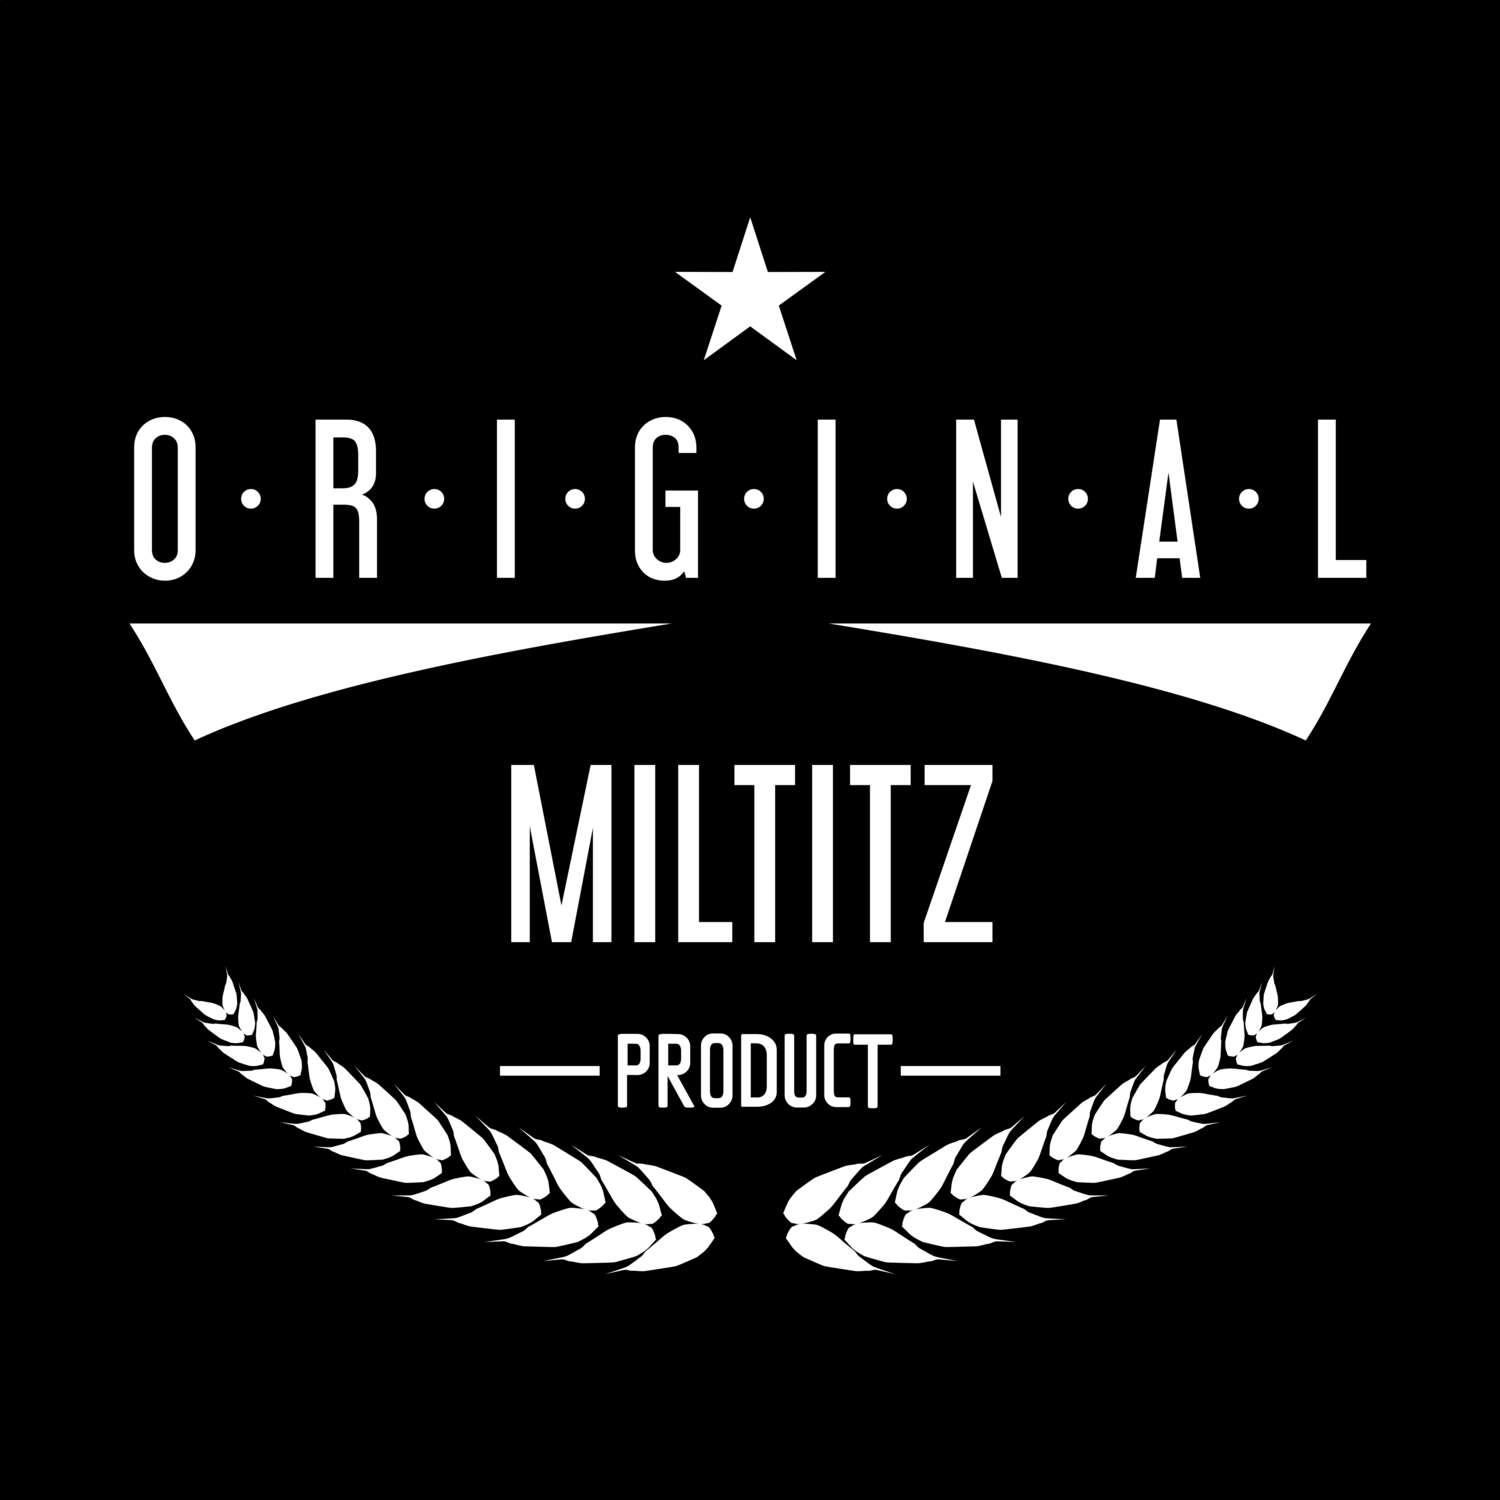 Miltitz T-Shirt »Original Product«